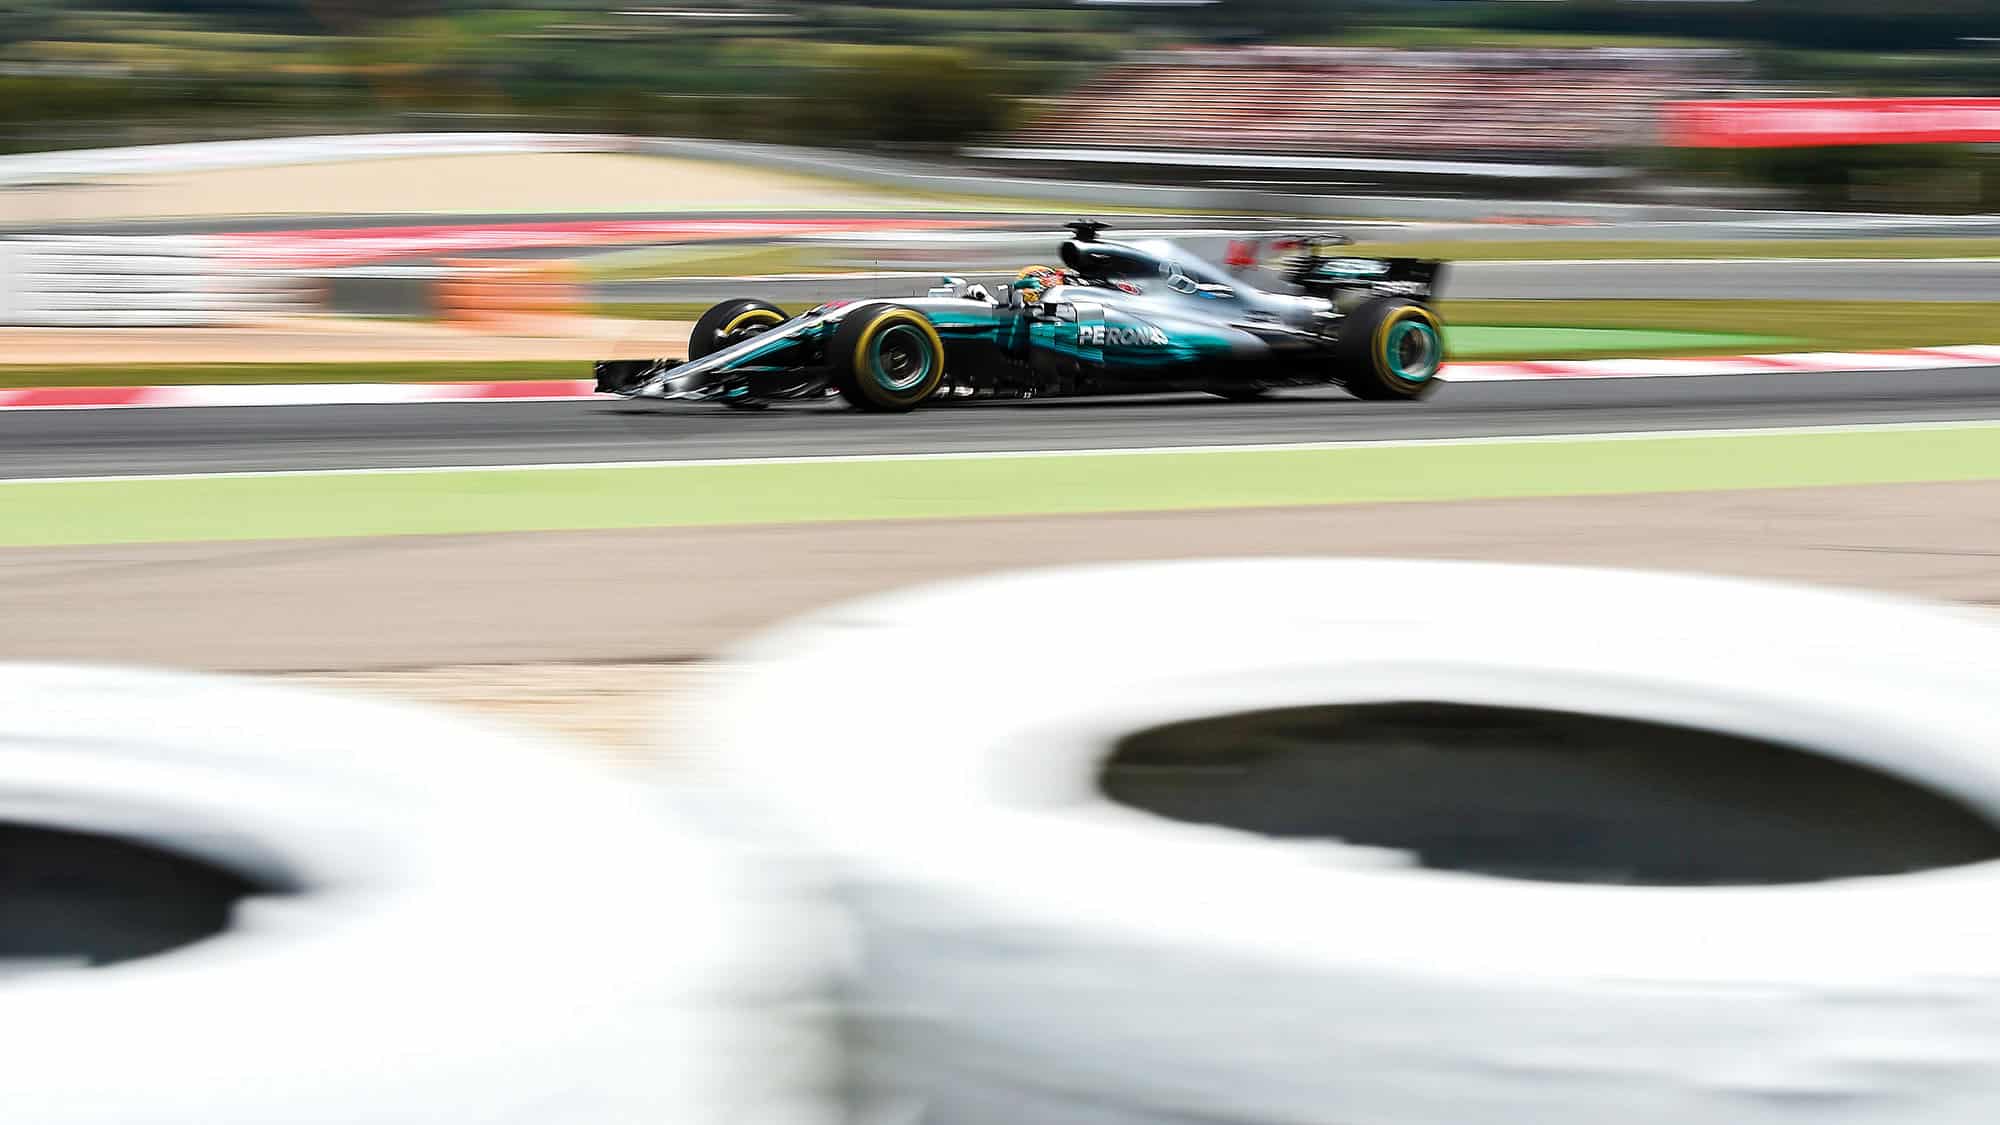 Mercedes of Lewis Hamilton during the 2017 Spanish Grand Prix